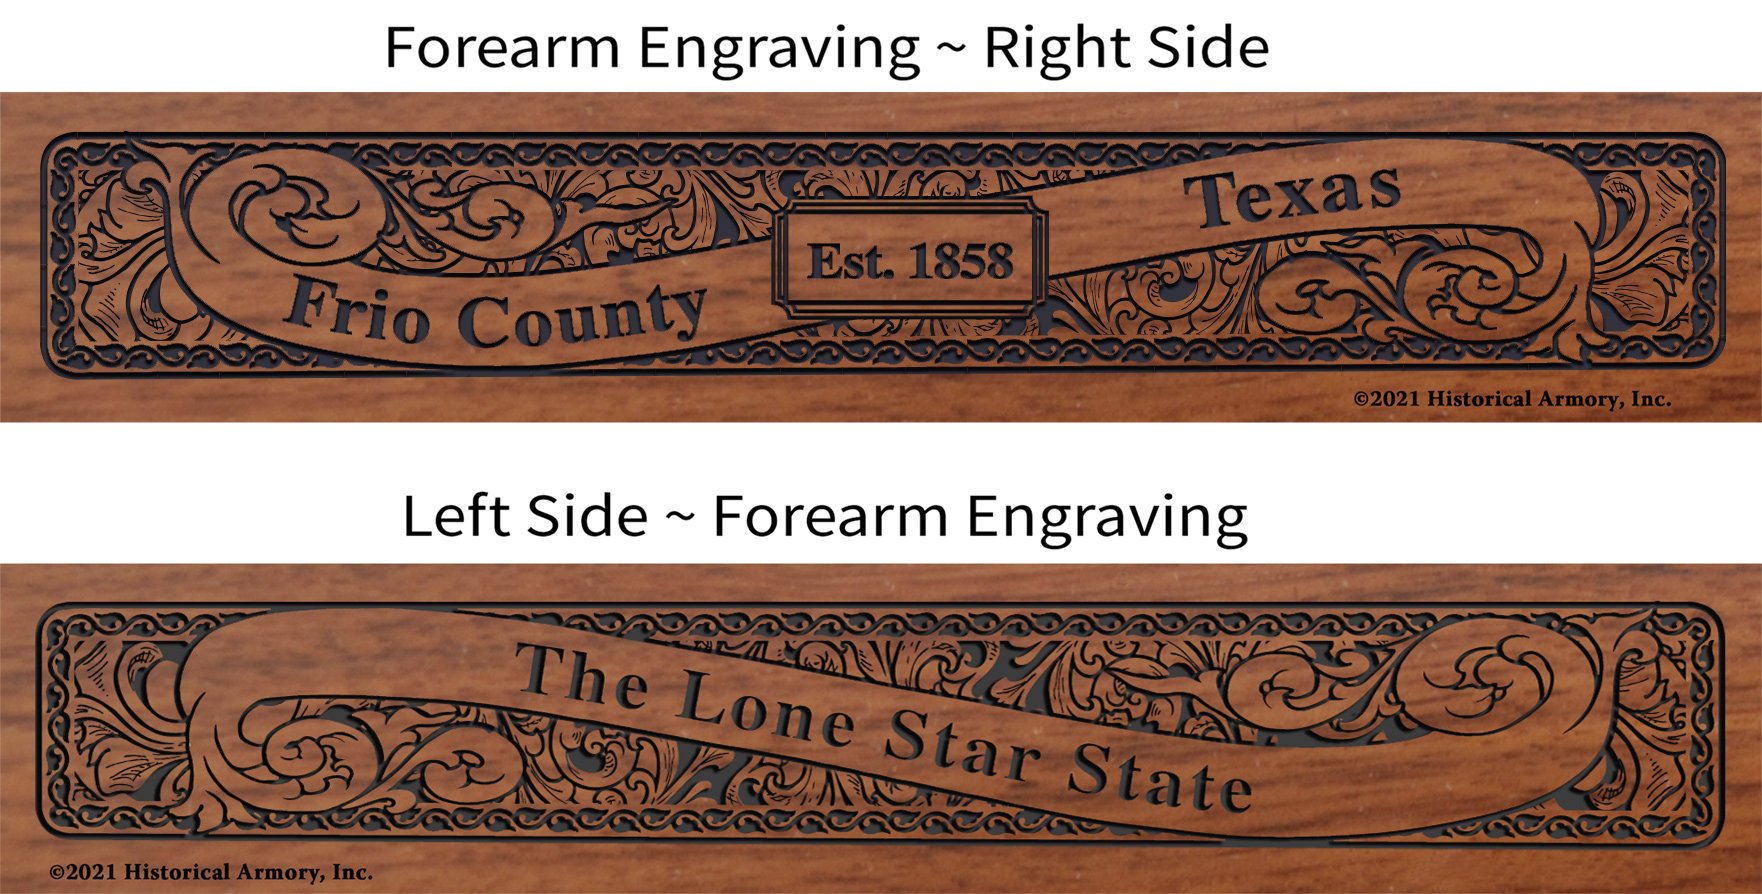 Frio County Texas Establishment and Motto History Engraved Rifle Forearm